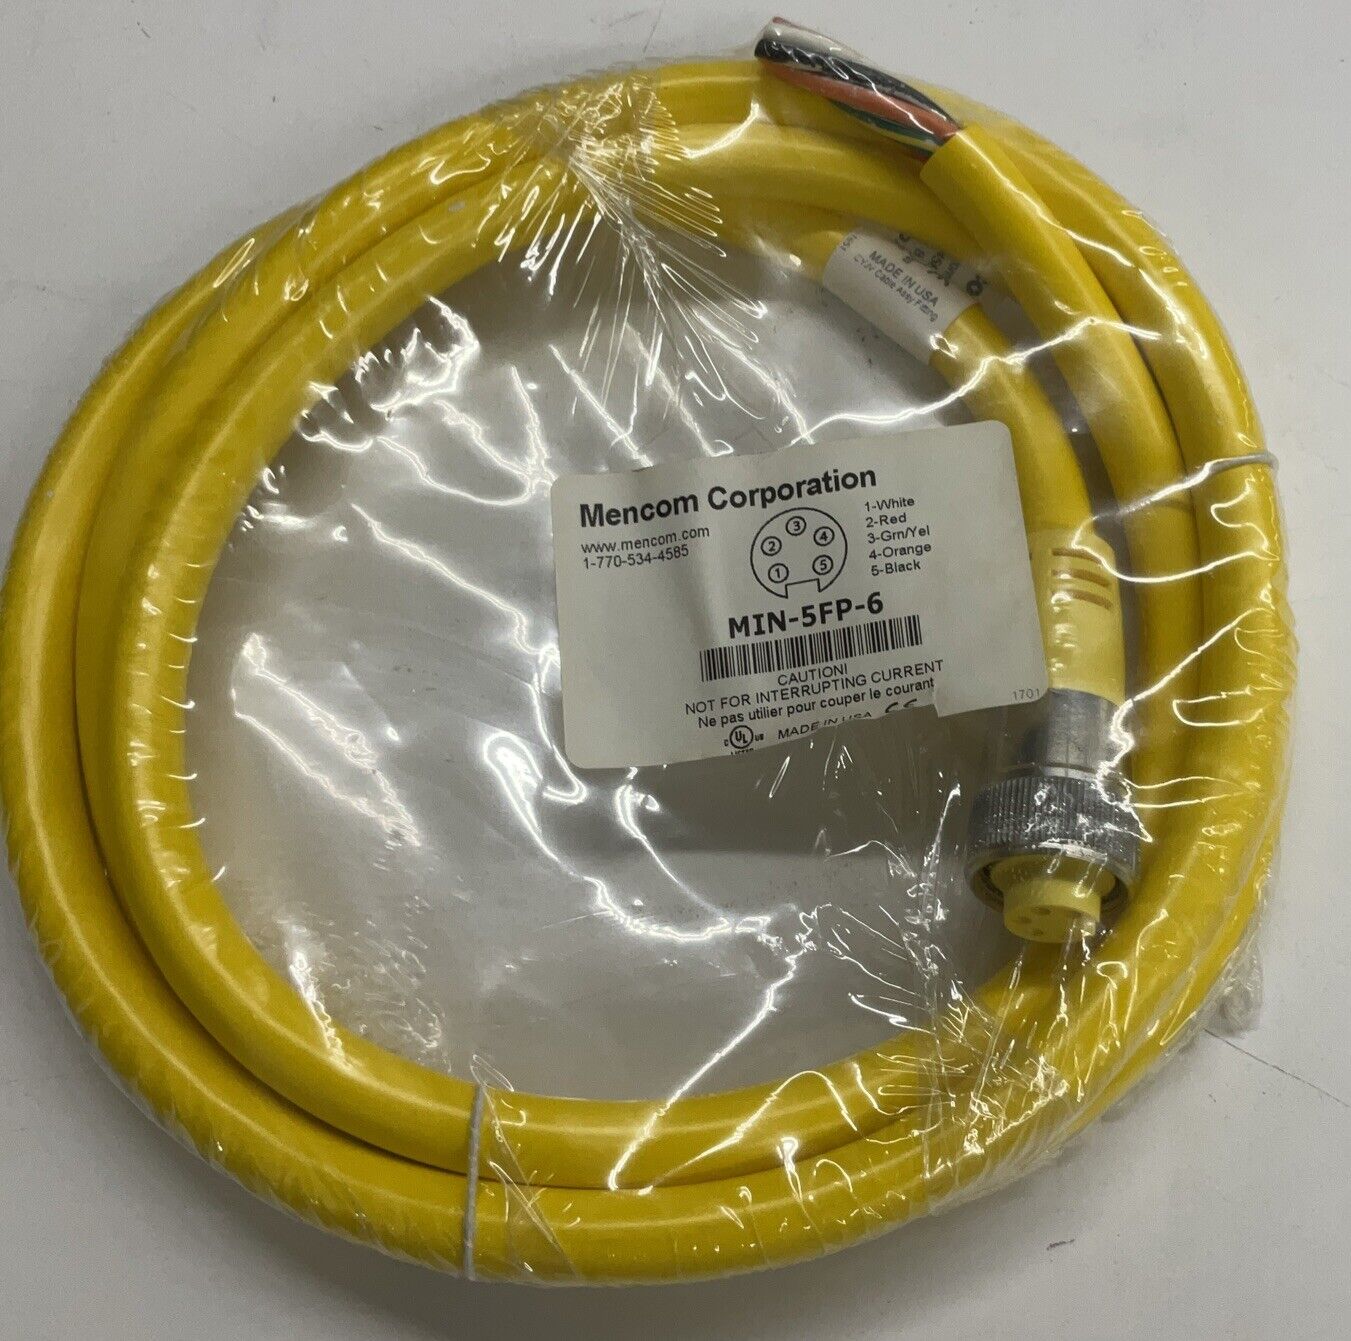 Mencom MIN-5FP-6 7/8" Mini, Female, 5-Pole 6-Feet Cable (CBL106) - 0